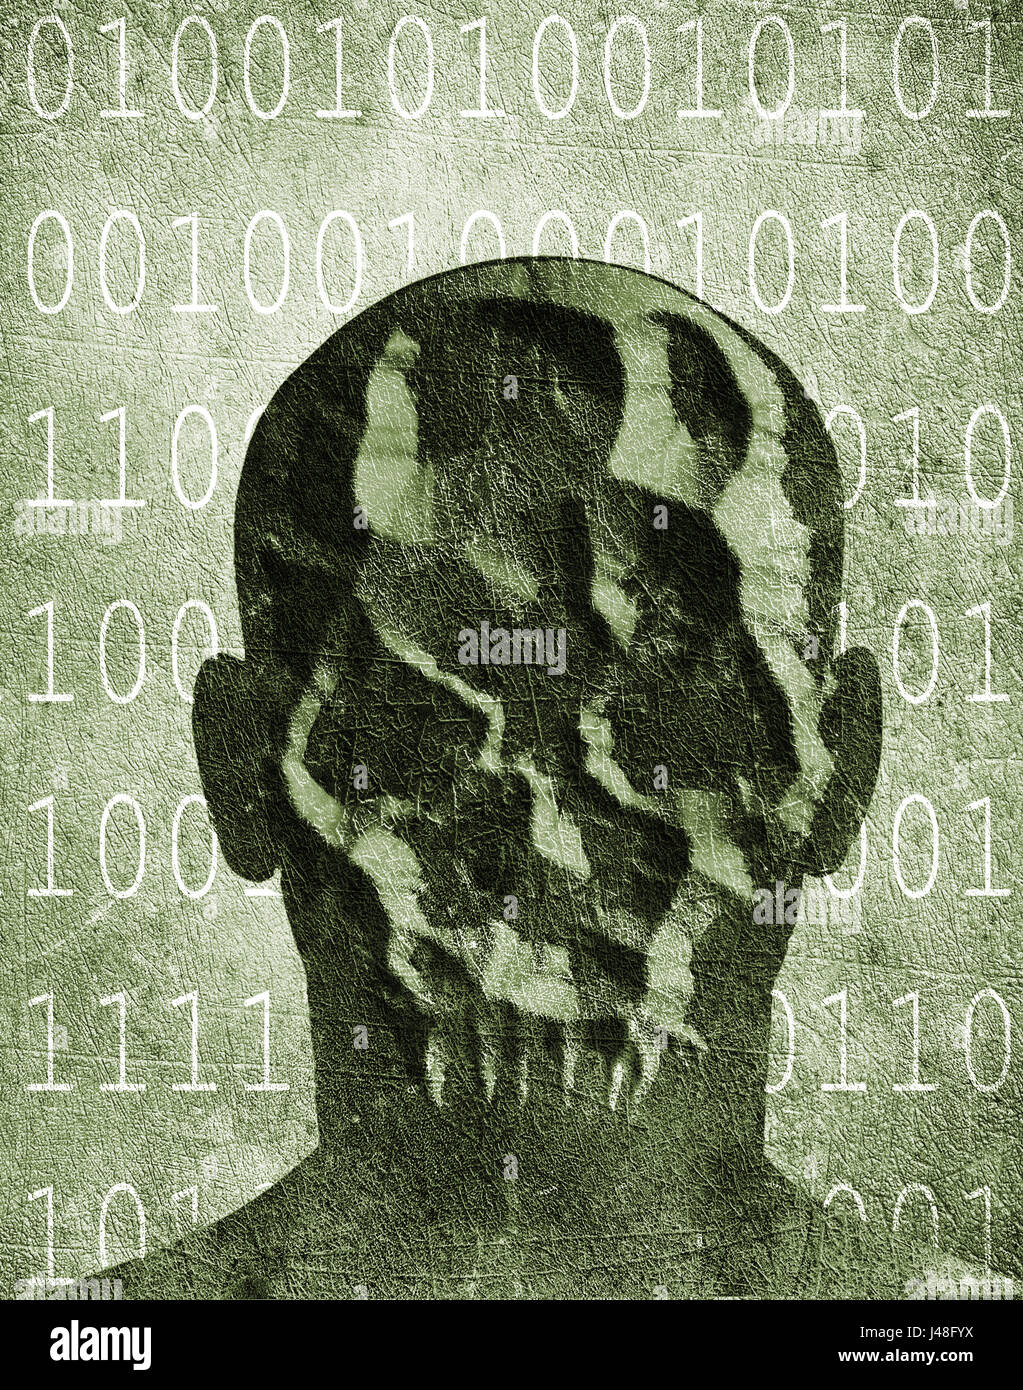 hacker with skull mask digital illustration Stock Photo